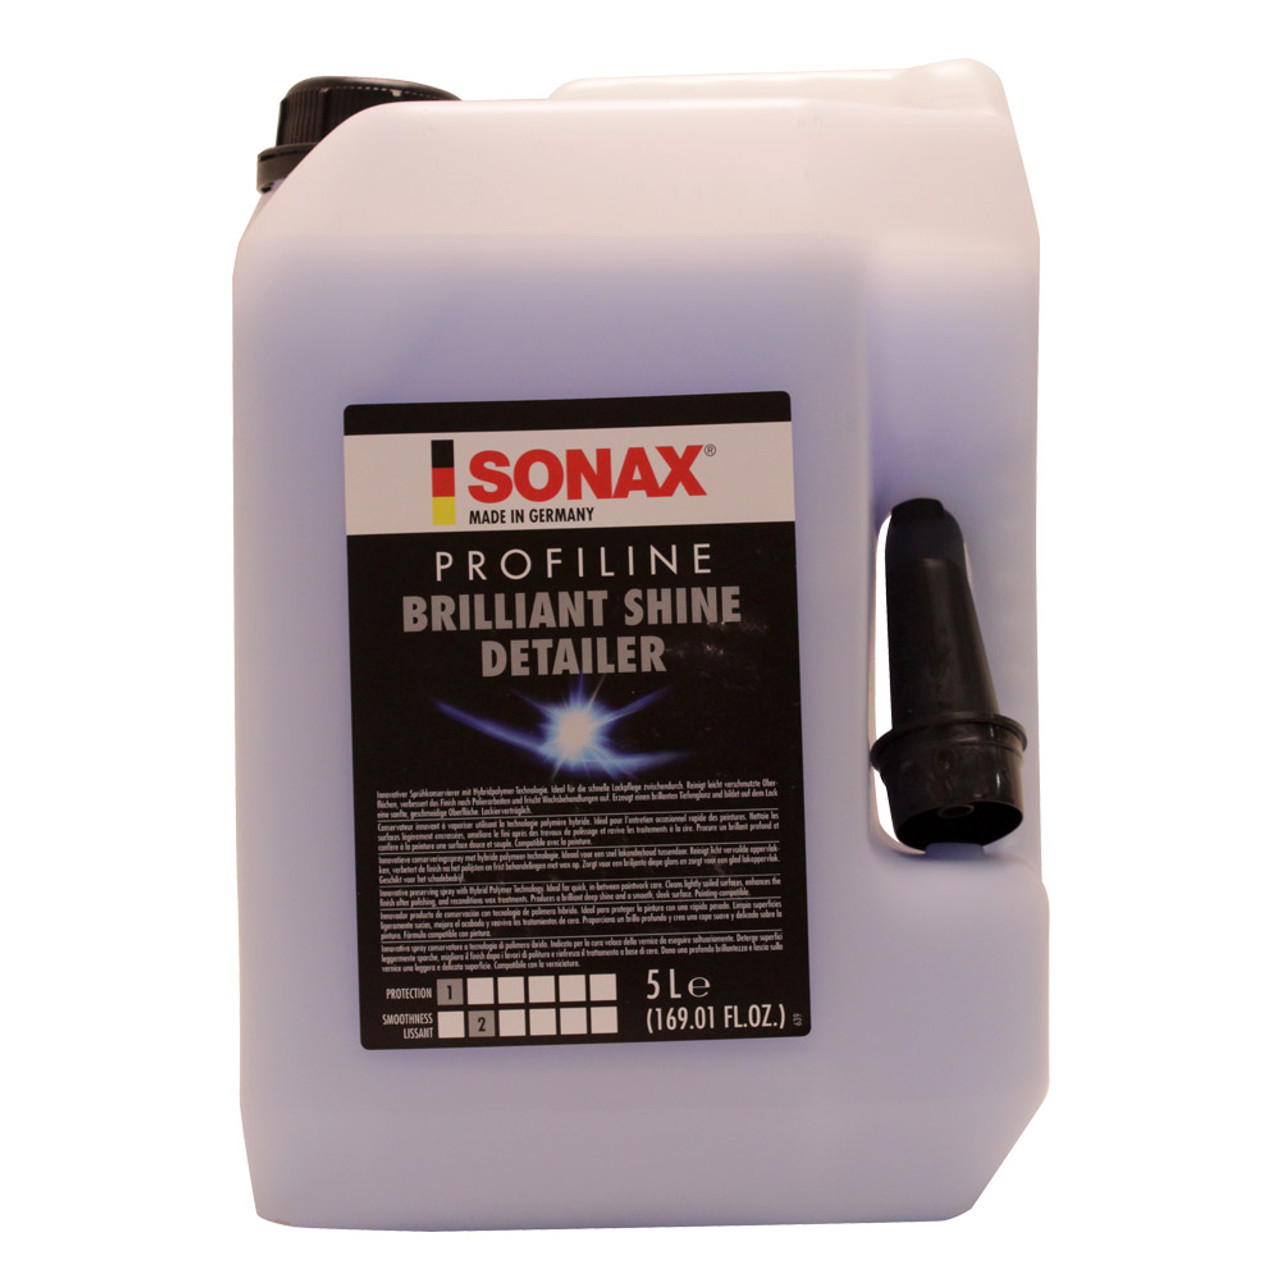 SONAX Brilliant Shine Detailer